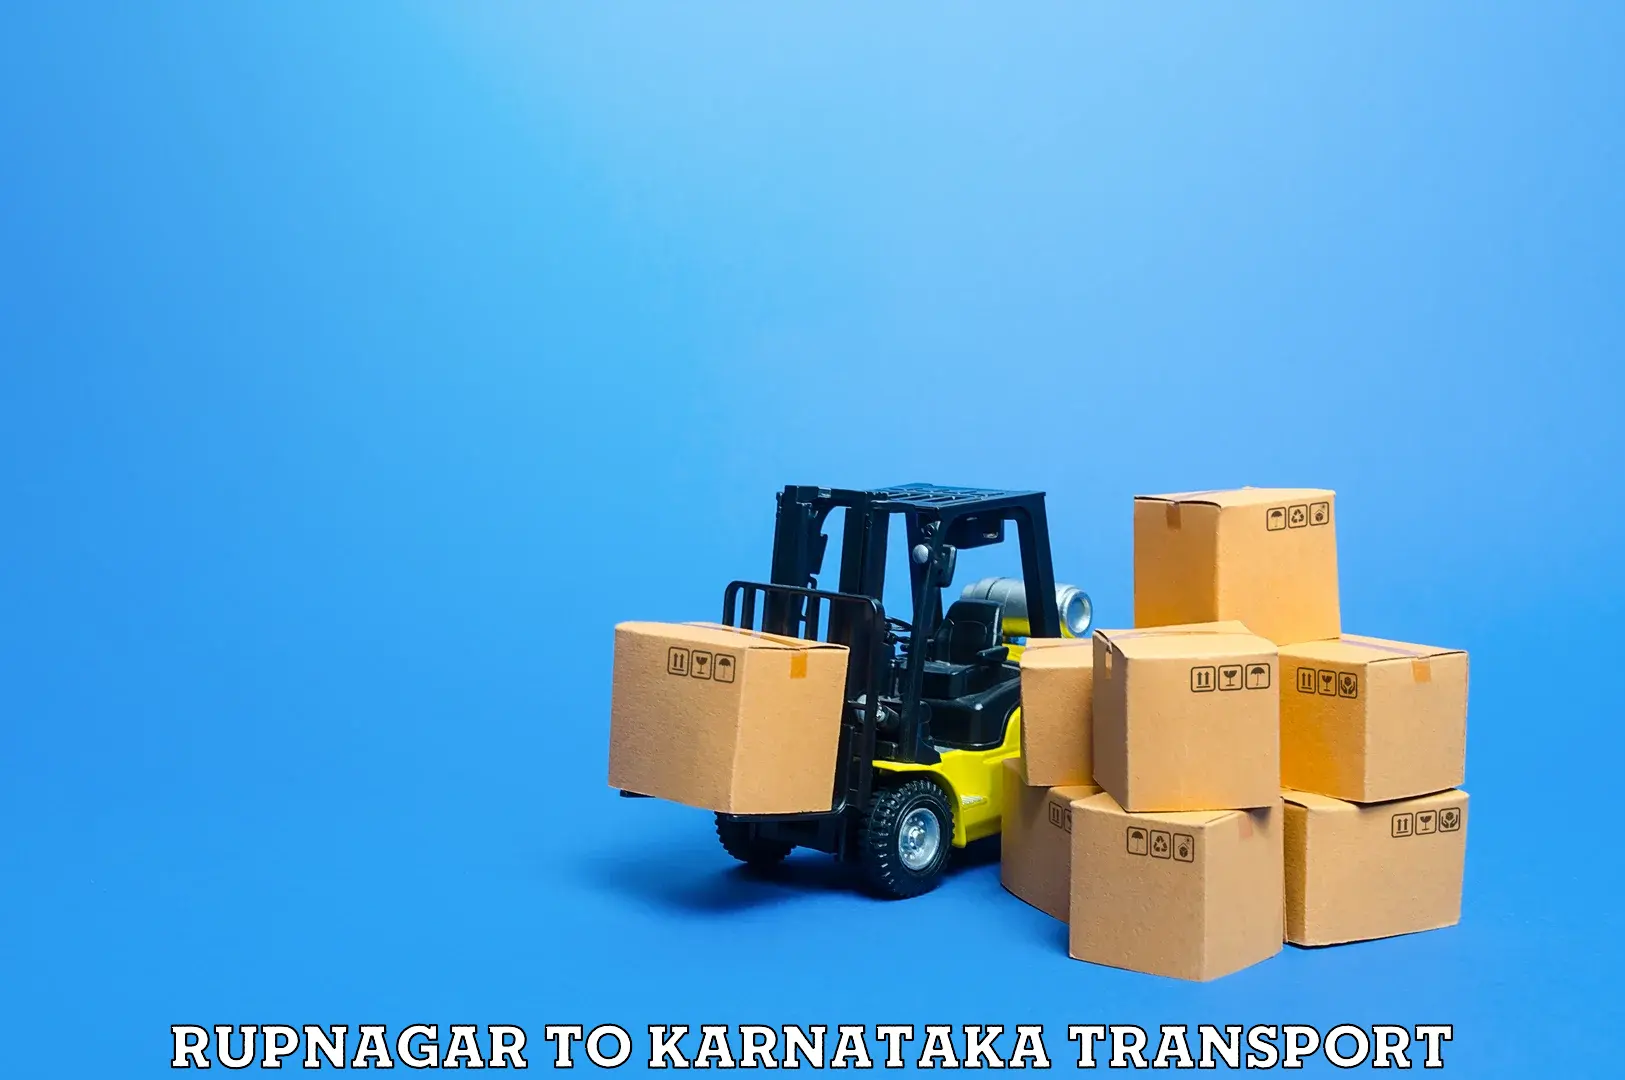 Truck transport companies in India Rupnagar to Karnataka